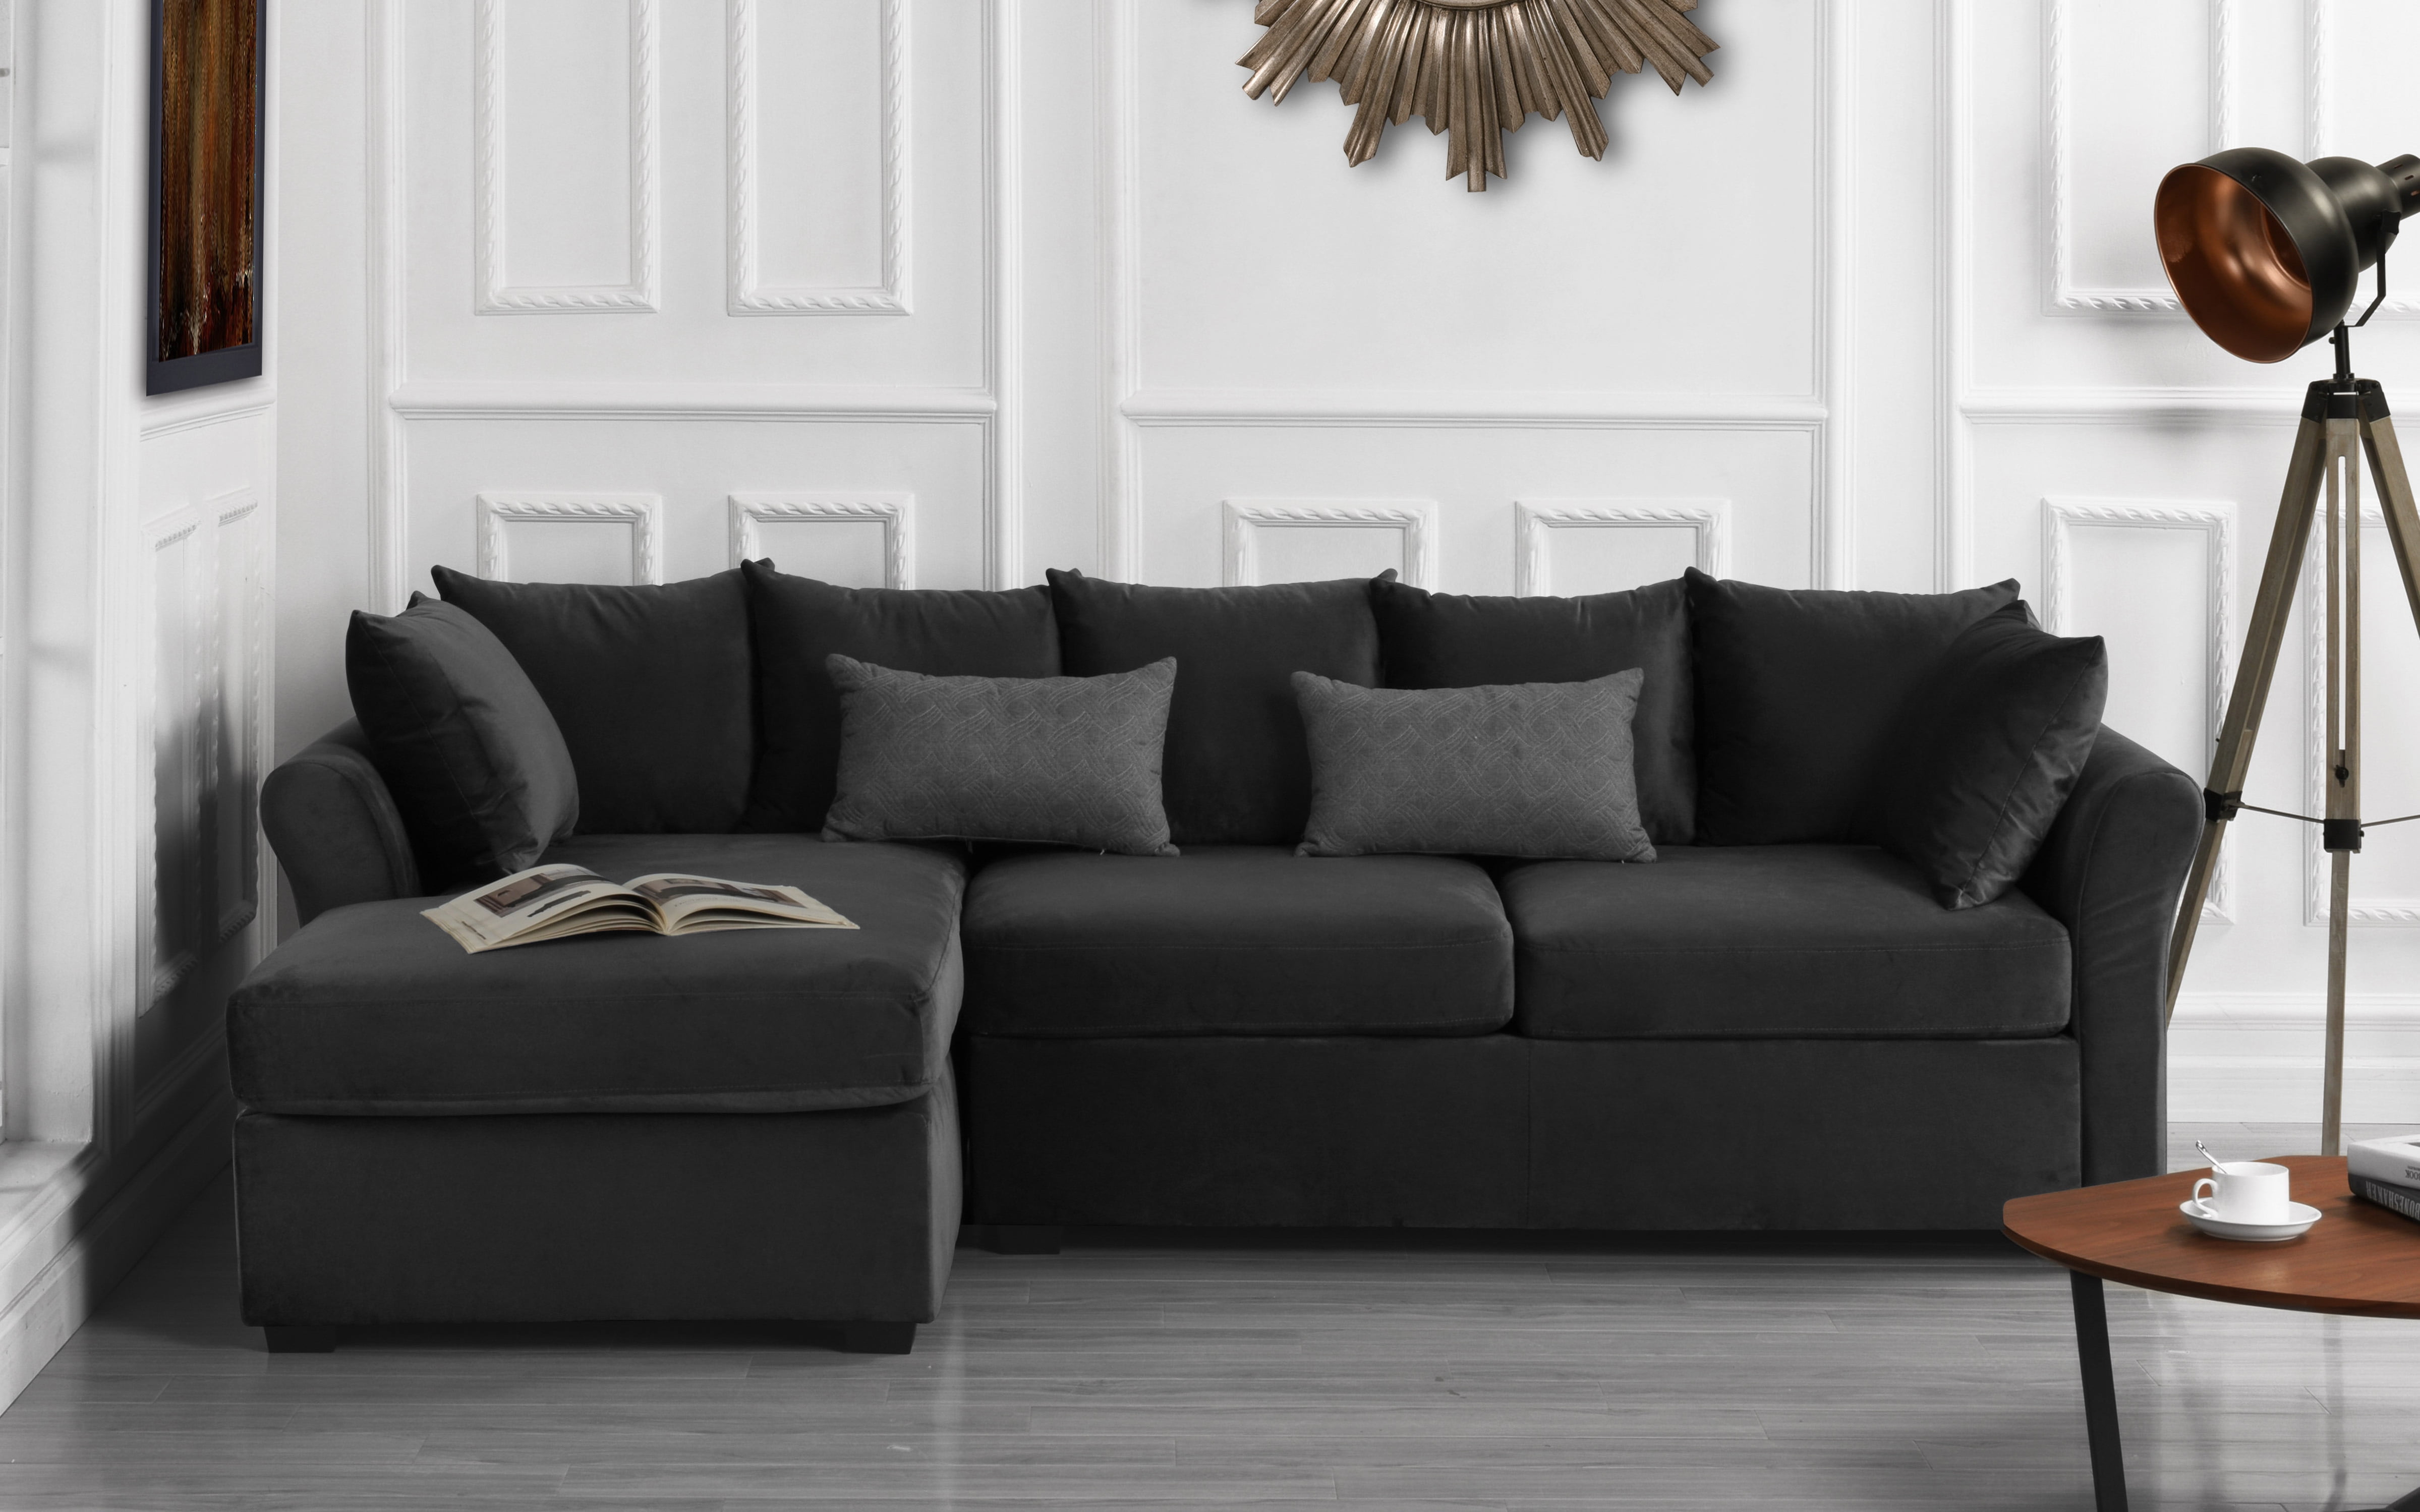 Black and grey sofa